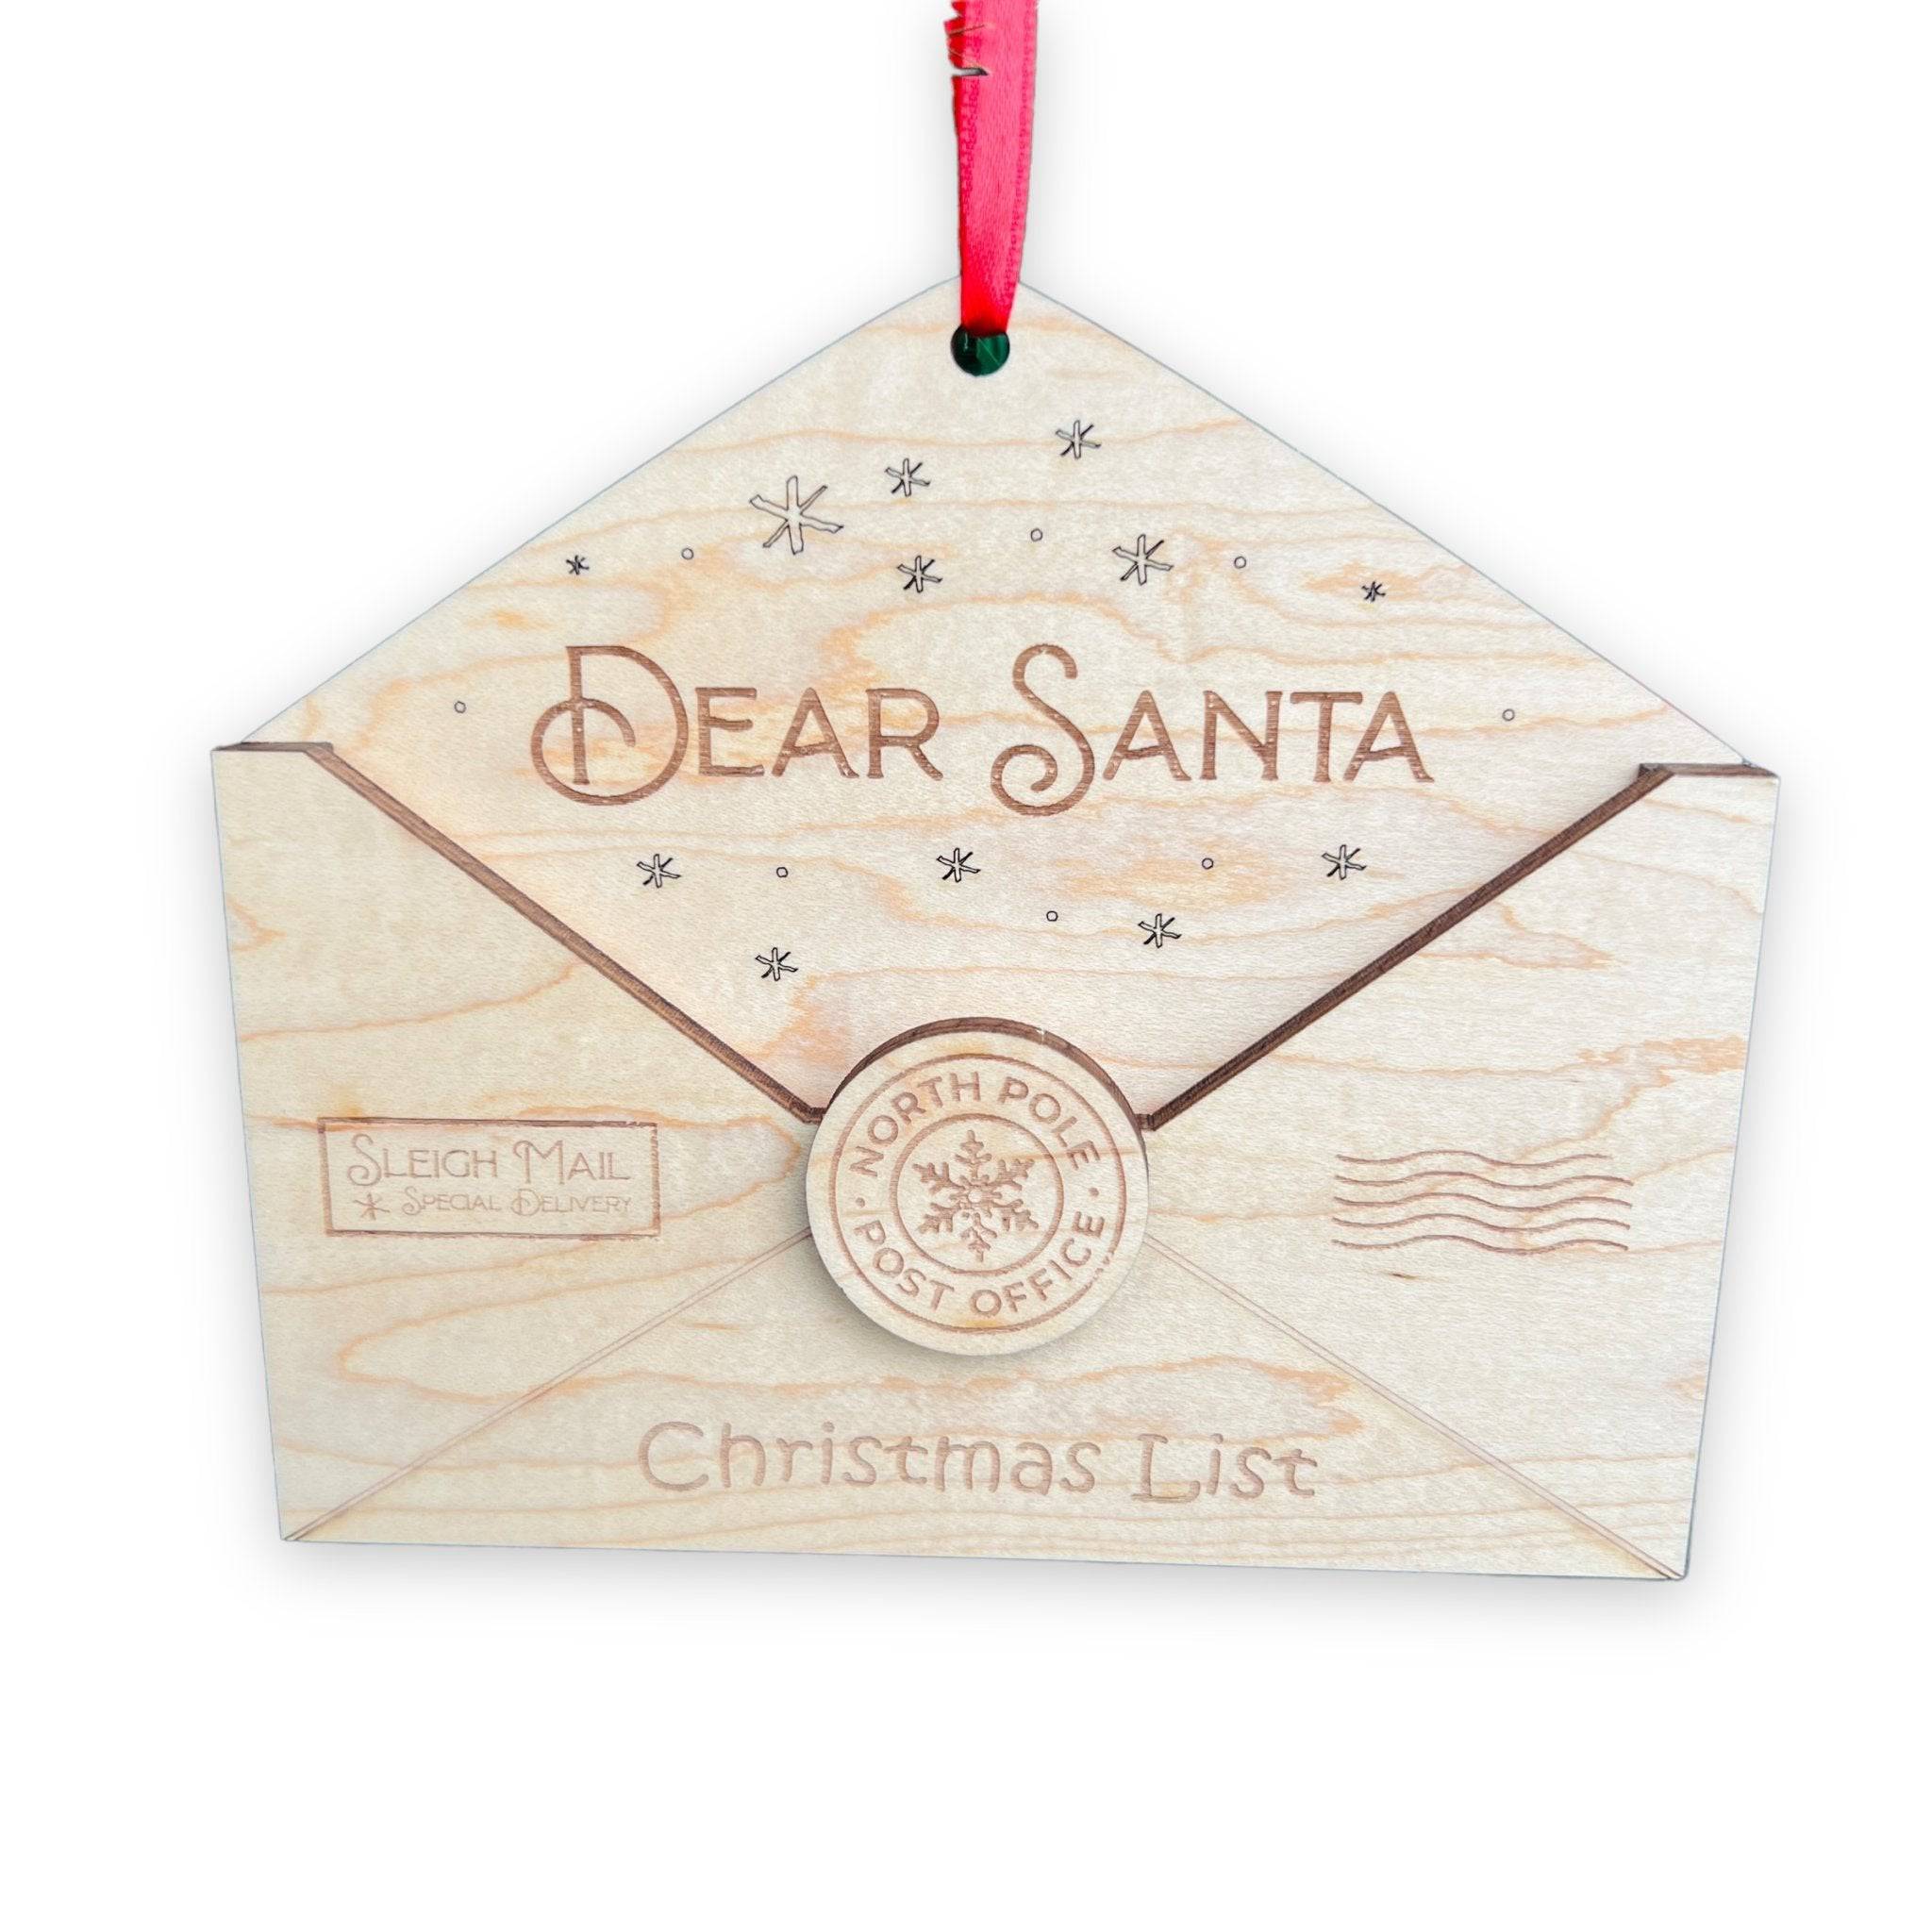 Dear Santa Christmas List Delivery Ornament - Sticks & Doodles